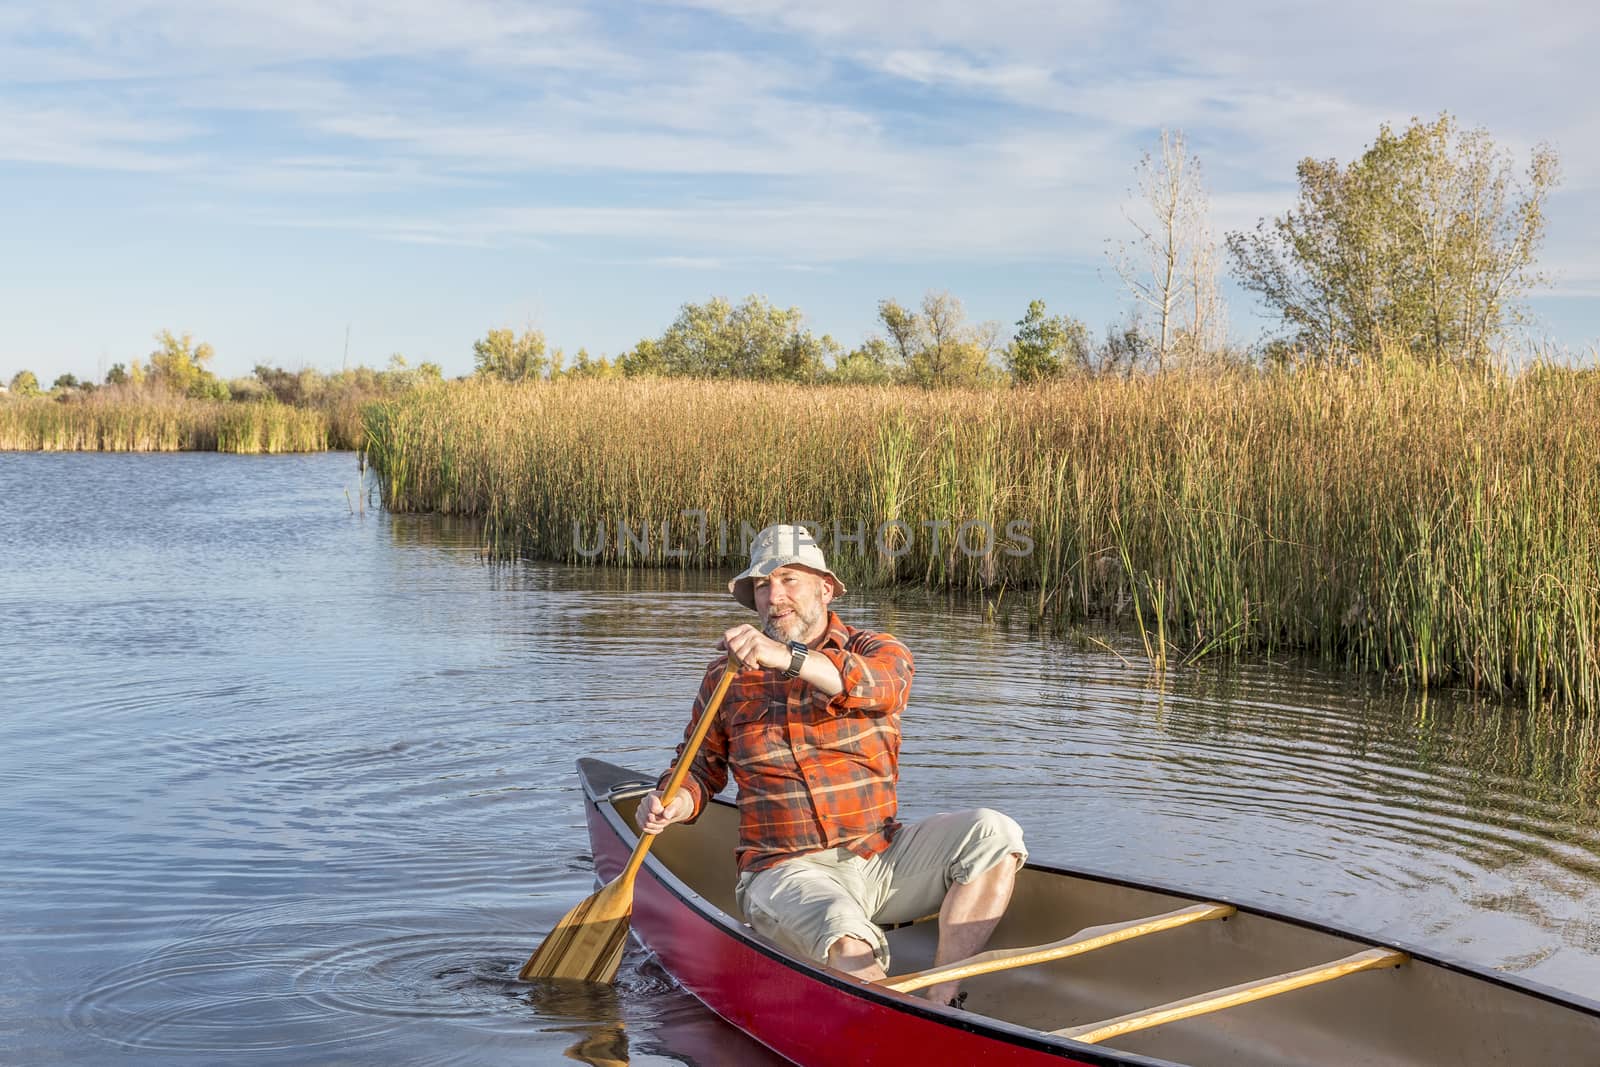 senior paddler enjoying paddling a red canoe on a calm lake, Riverbend Ponds Natural Area, Fort Collins, Colorado